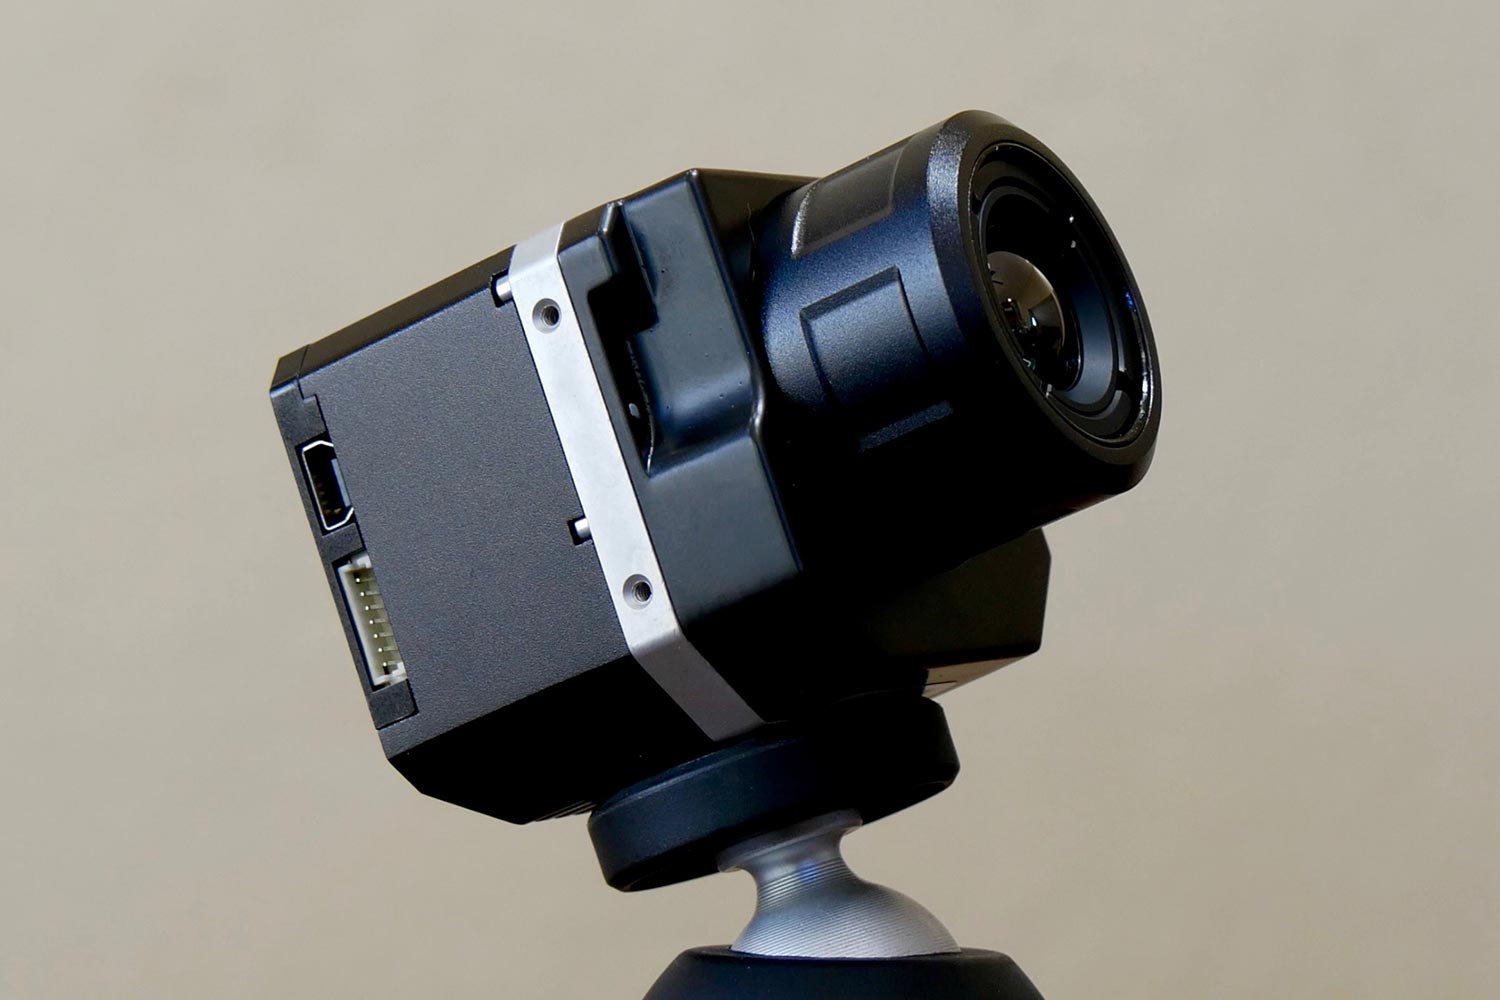 flir vue pro thermal camera for drones 001